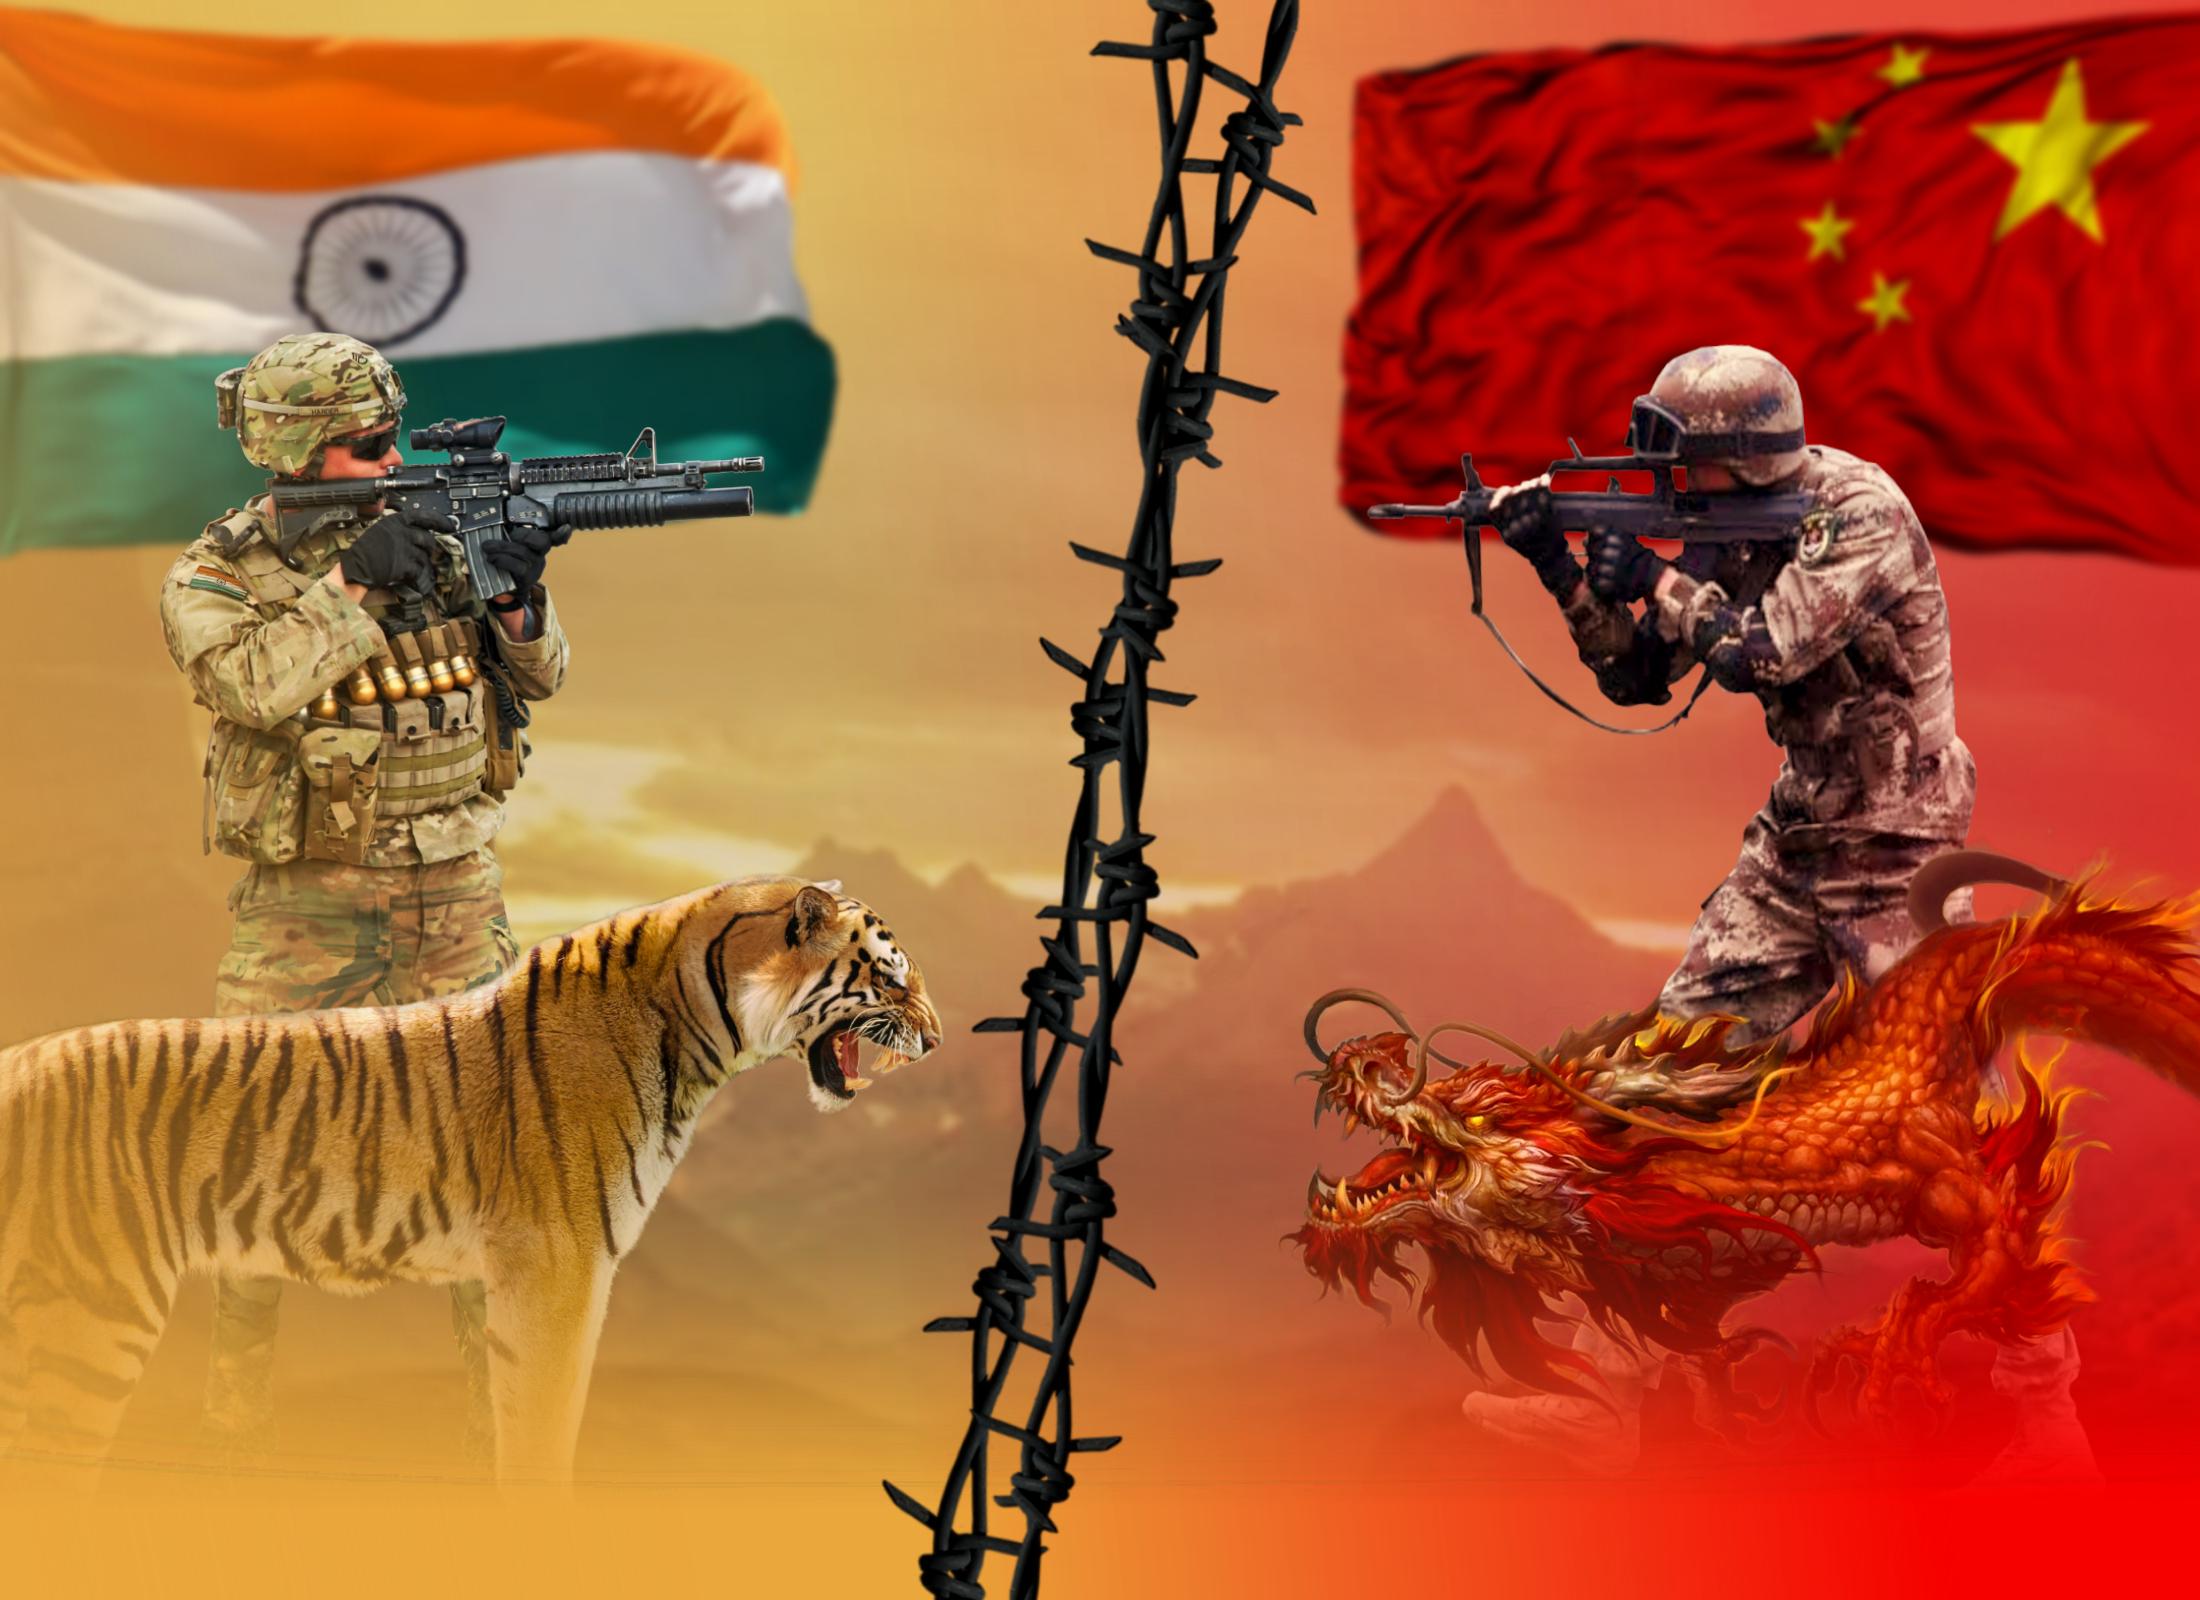 india vs china concept by ksame on deviantart